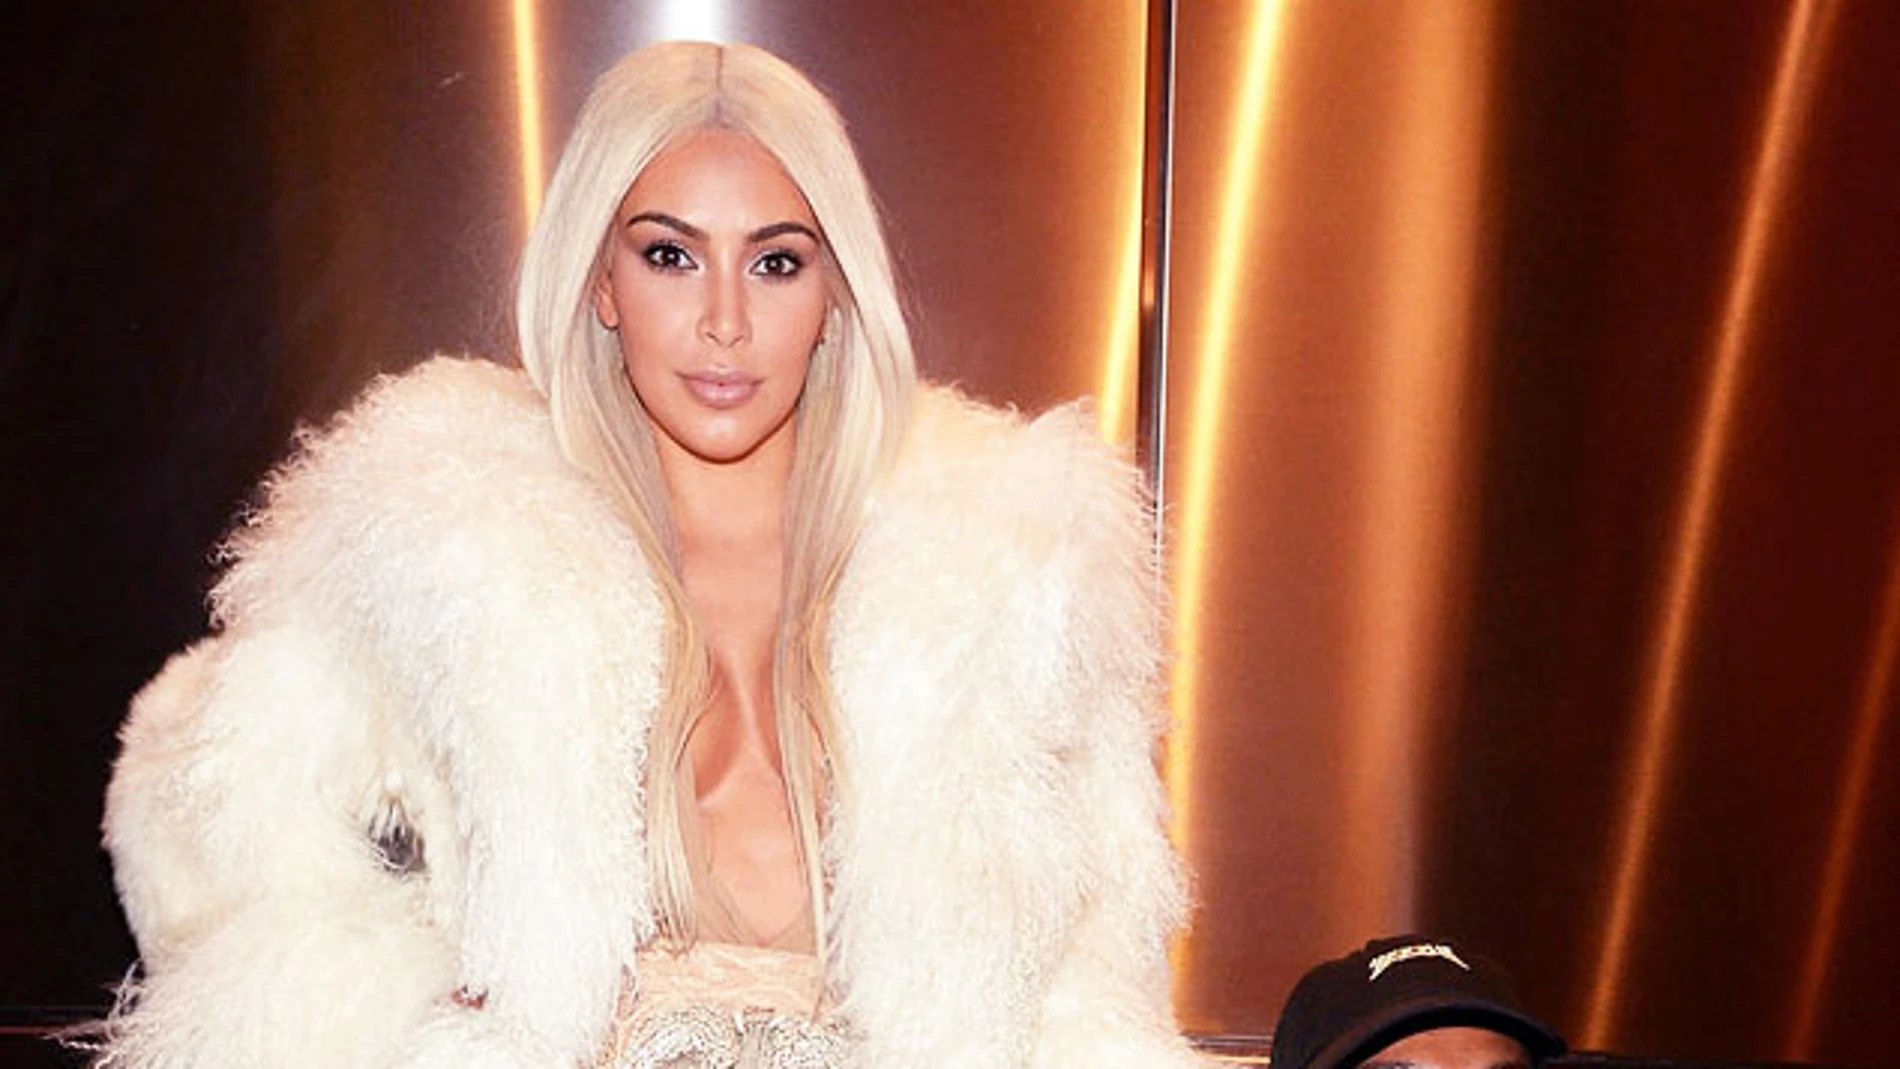 Kim Kardashian reaparece tras su maternidad con nuevo look rubio platino